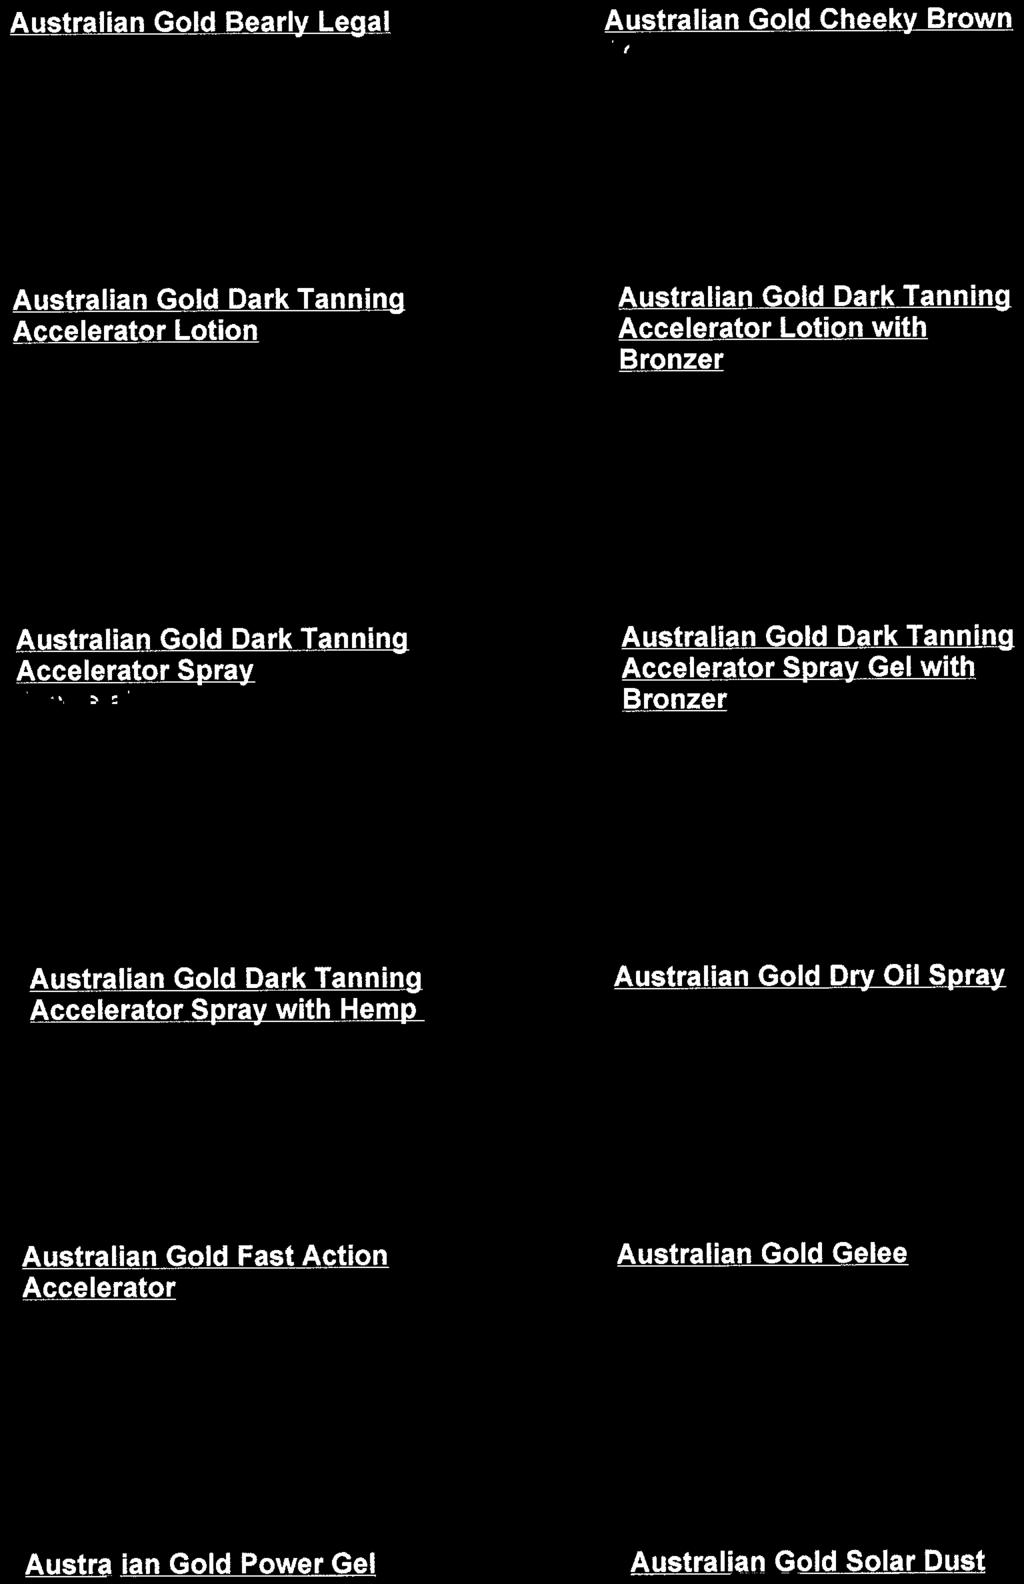 24 Accelerator Lotion Accelerator Lotion Accelerator Lotion DarkTanningAcceleratorLotion Retail: $15.00 Your Price: $7.65 Price: $8.16 :..,. A.!celerator Plus Bronzer l Australian Gold Cheeky Brown Australian Gold Cheeky Brown CheekyBrown Retail: $20.